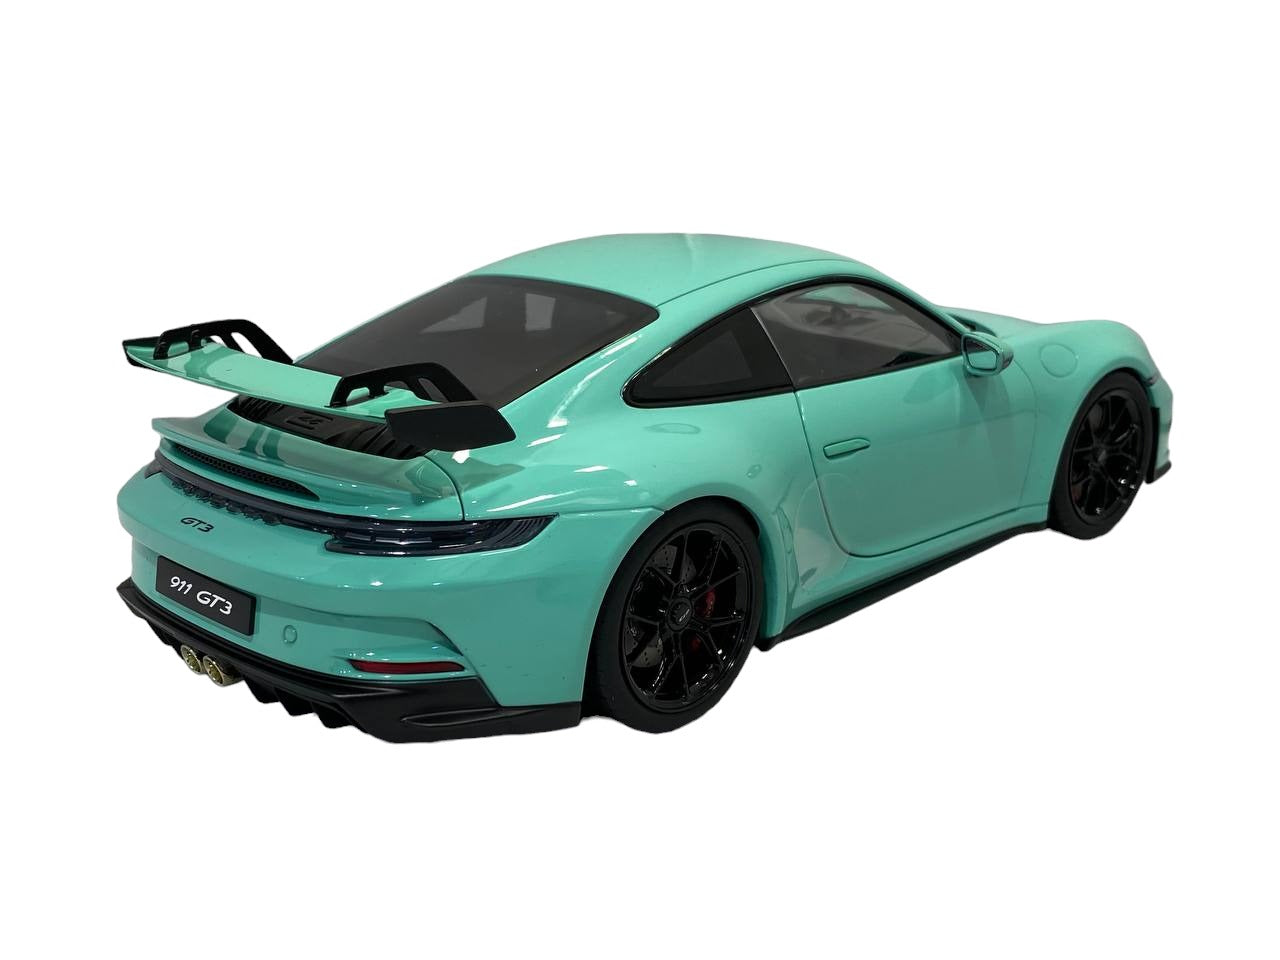 1/18 Diecast Norev Porsche 911 GT3  MINT 2021 Scale Model Car|Sold in Dturman.com Dubai UAE.